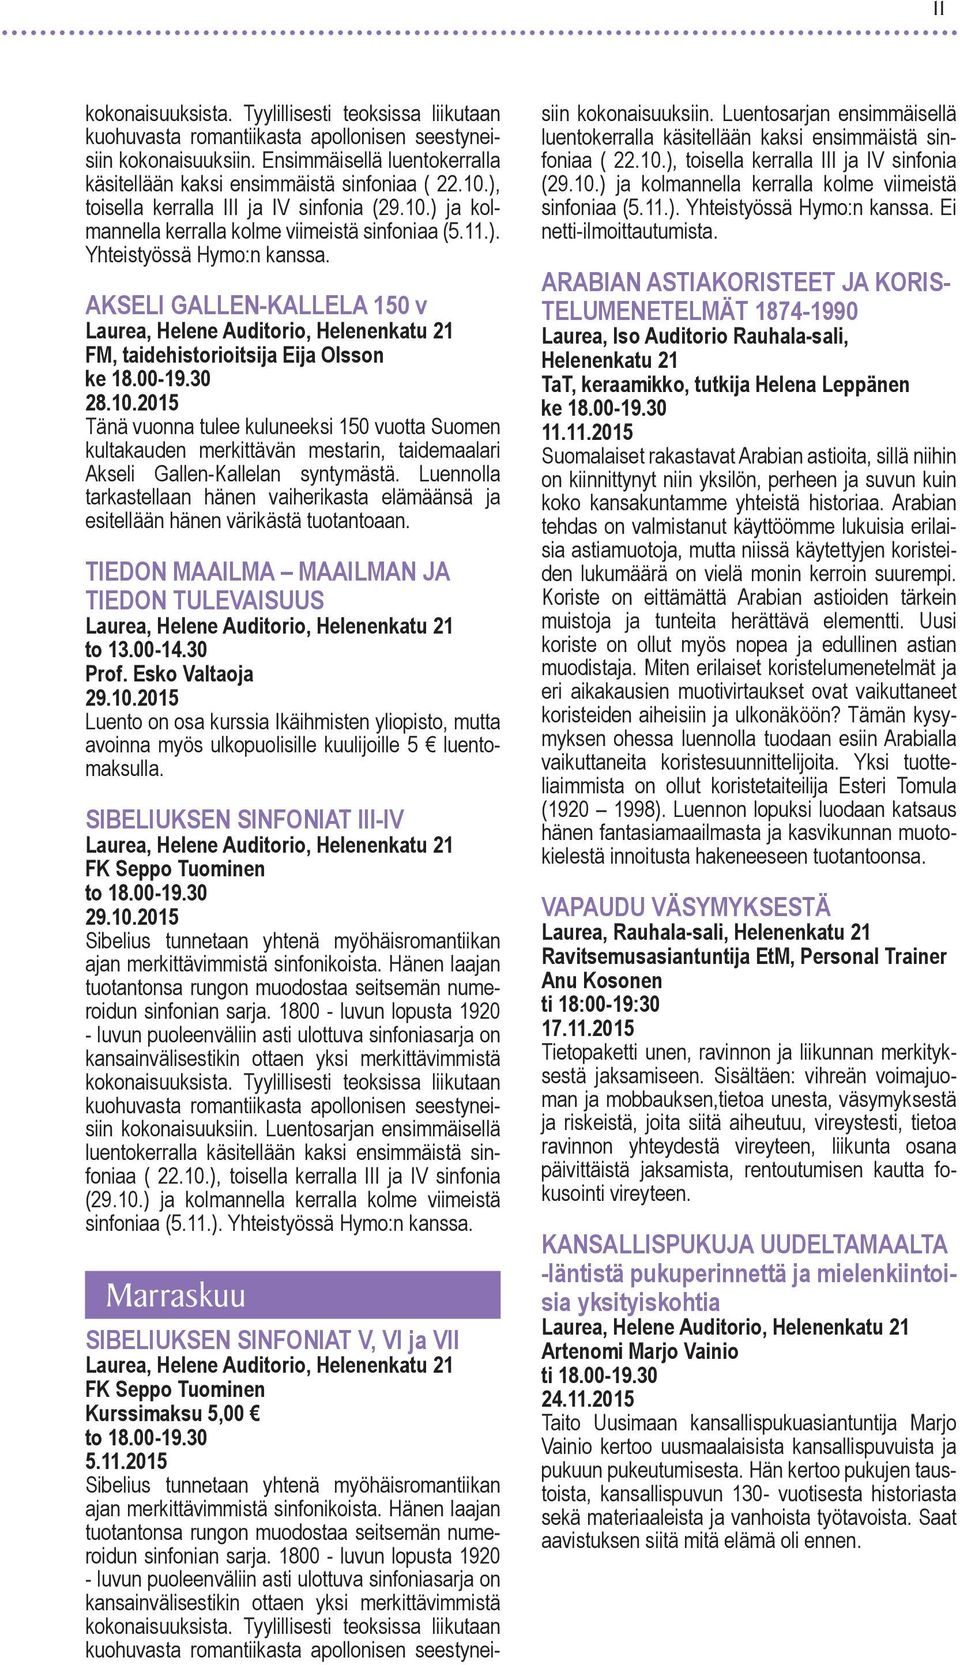 AKSELI GALLEN-KALLELA 150 v Laurea, Helene Auditorio, FM, taidehistorioitsija Eija Olsson ke 18.00-19.30 28.10.